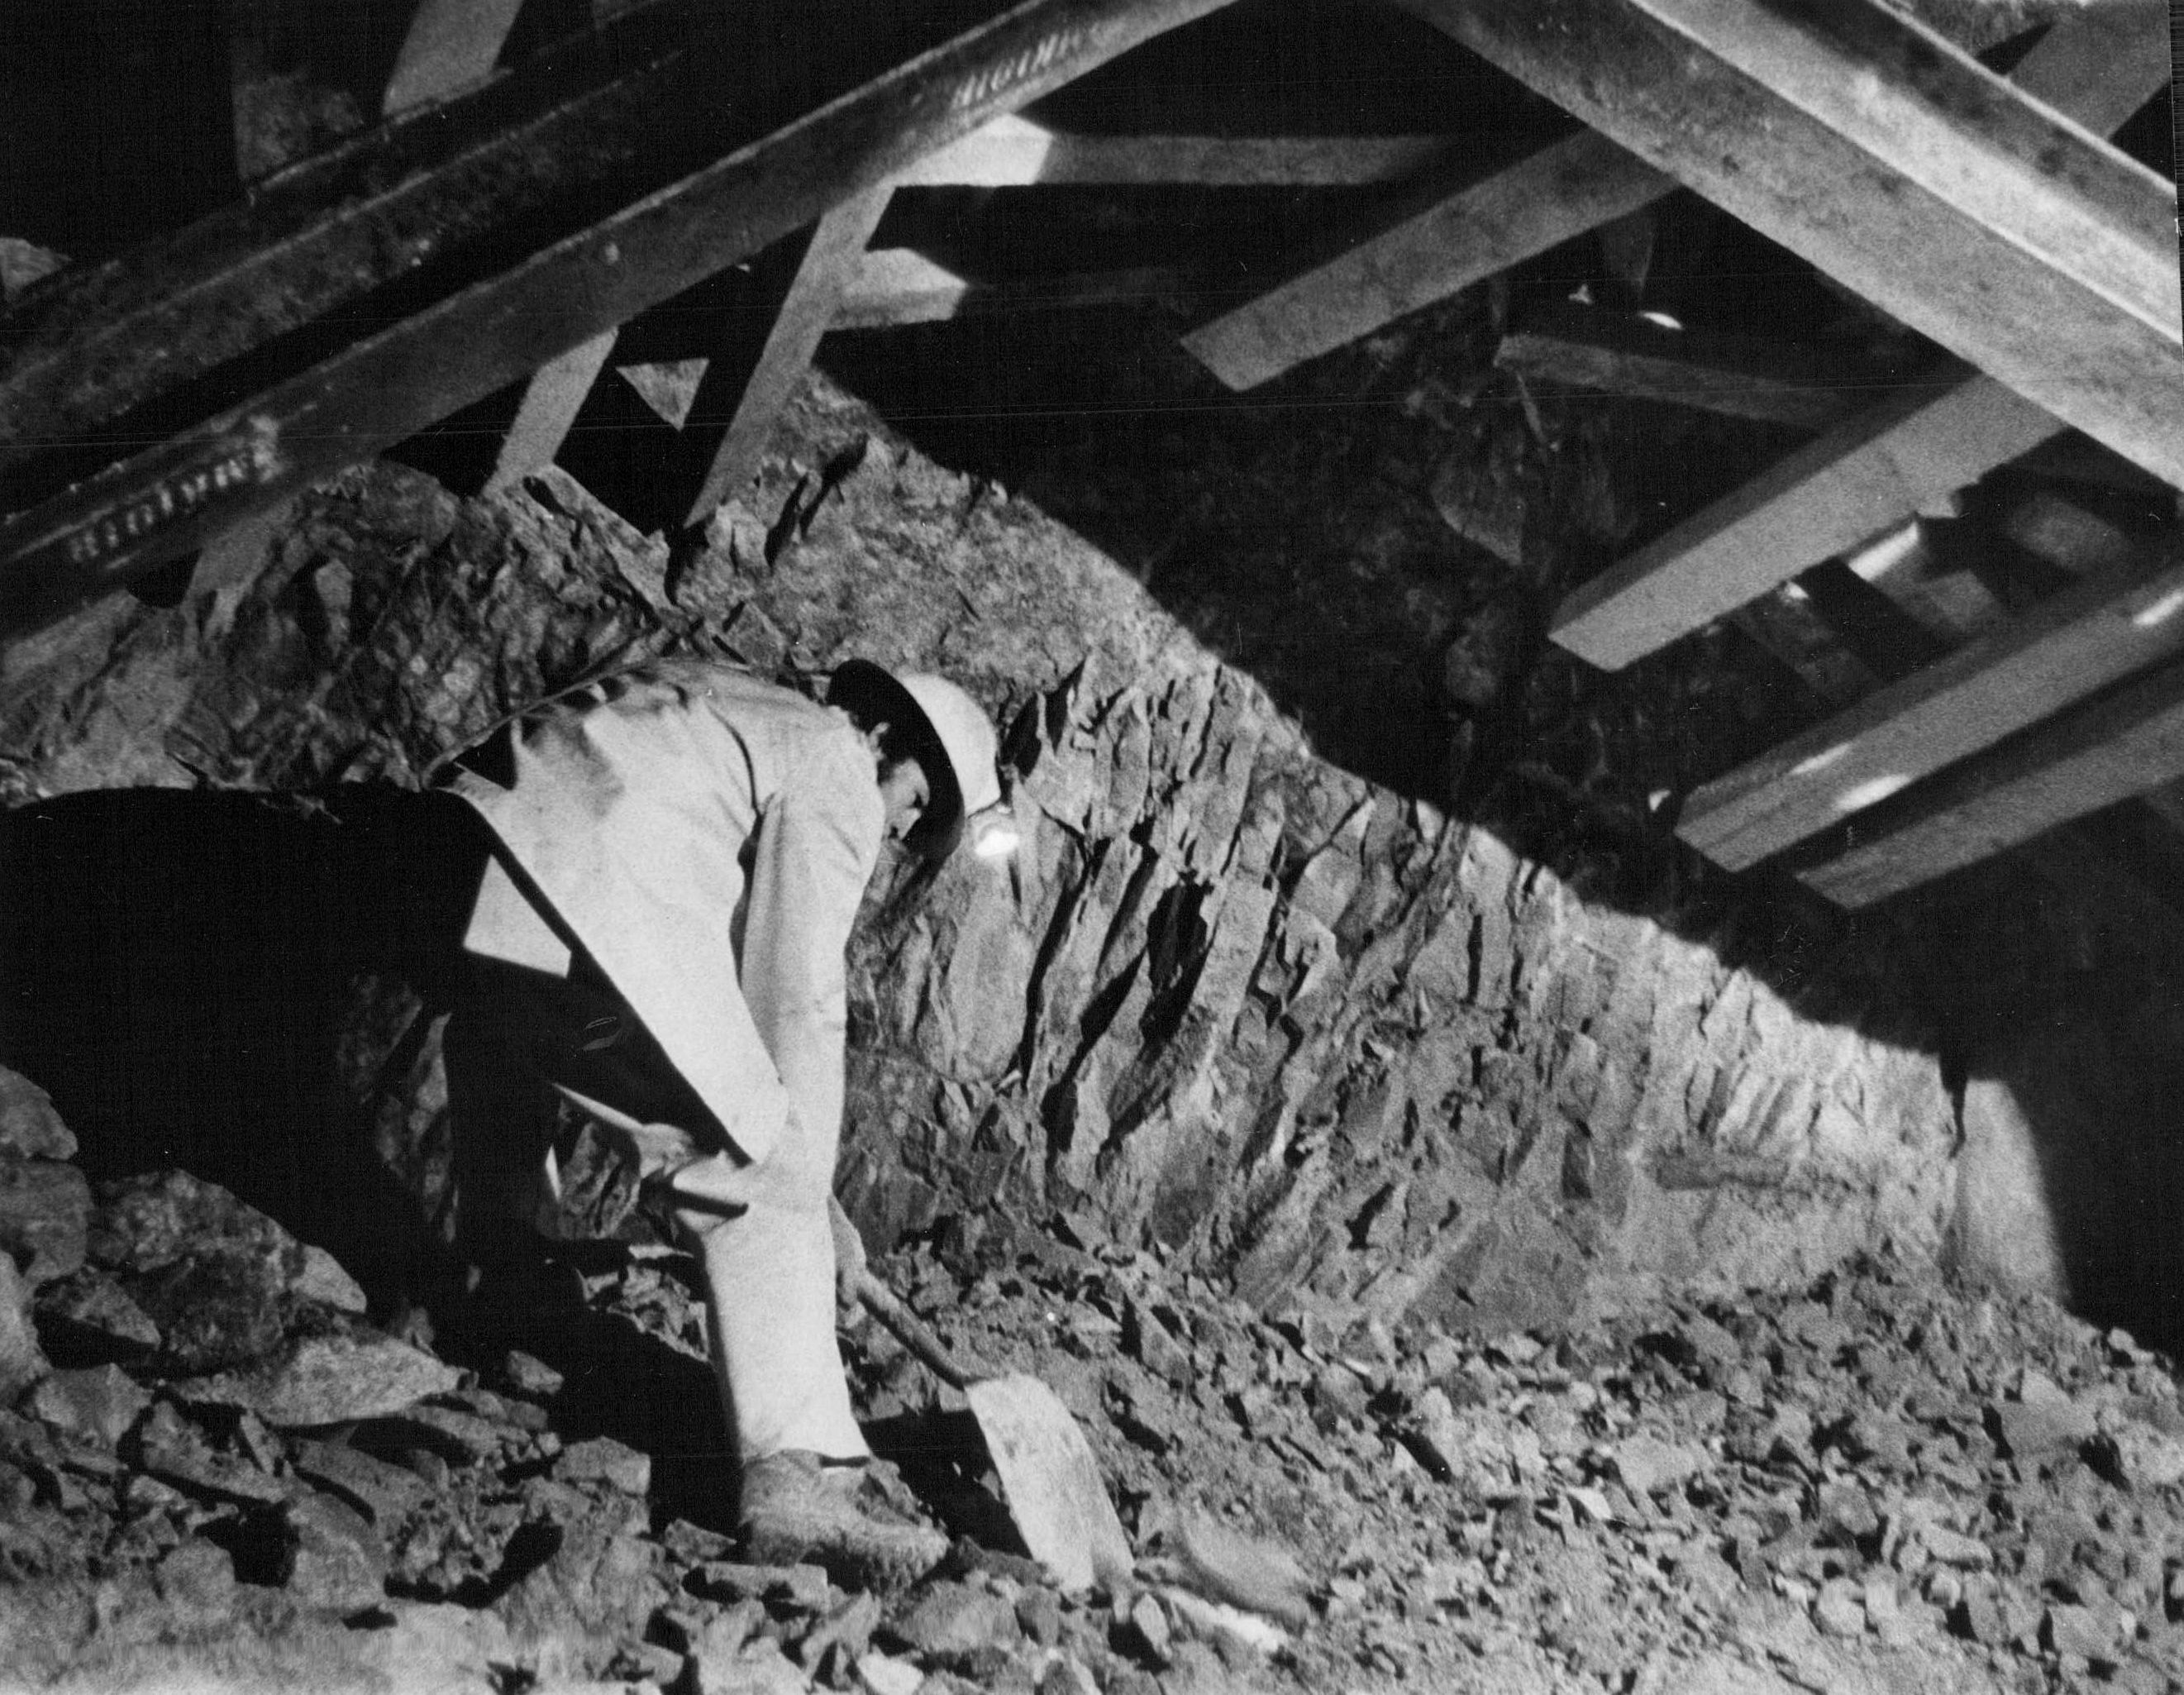 NOV 14 1972, NOV 15 1972 A hard-rock miner clears granite debris form cross-bore drill that will connect both halves of Eisenhower Memorial Tunnel. Credit: Denver Post, Inc. (Denver Post via Getty Images)